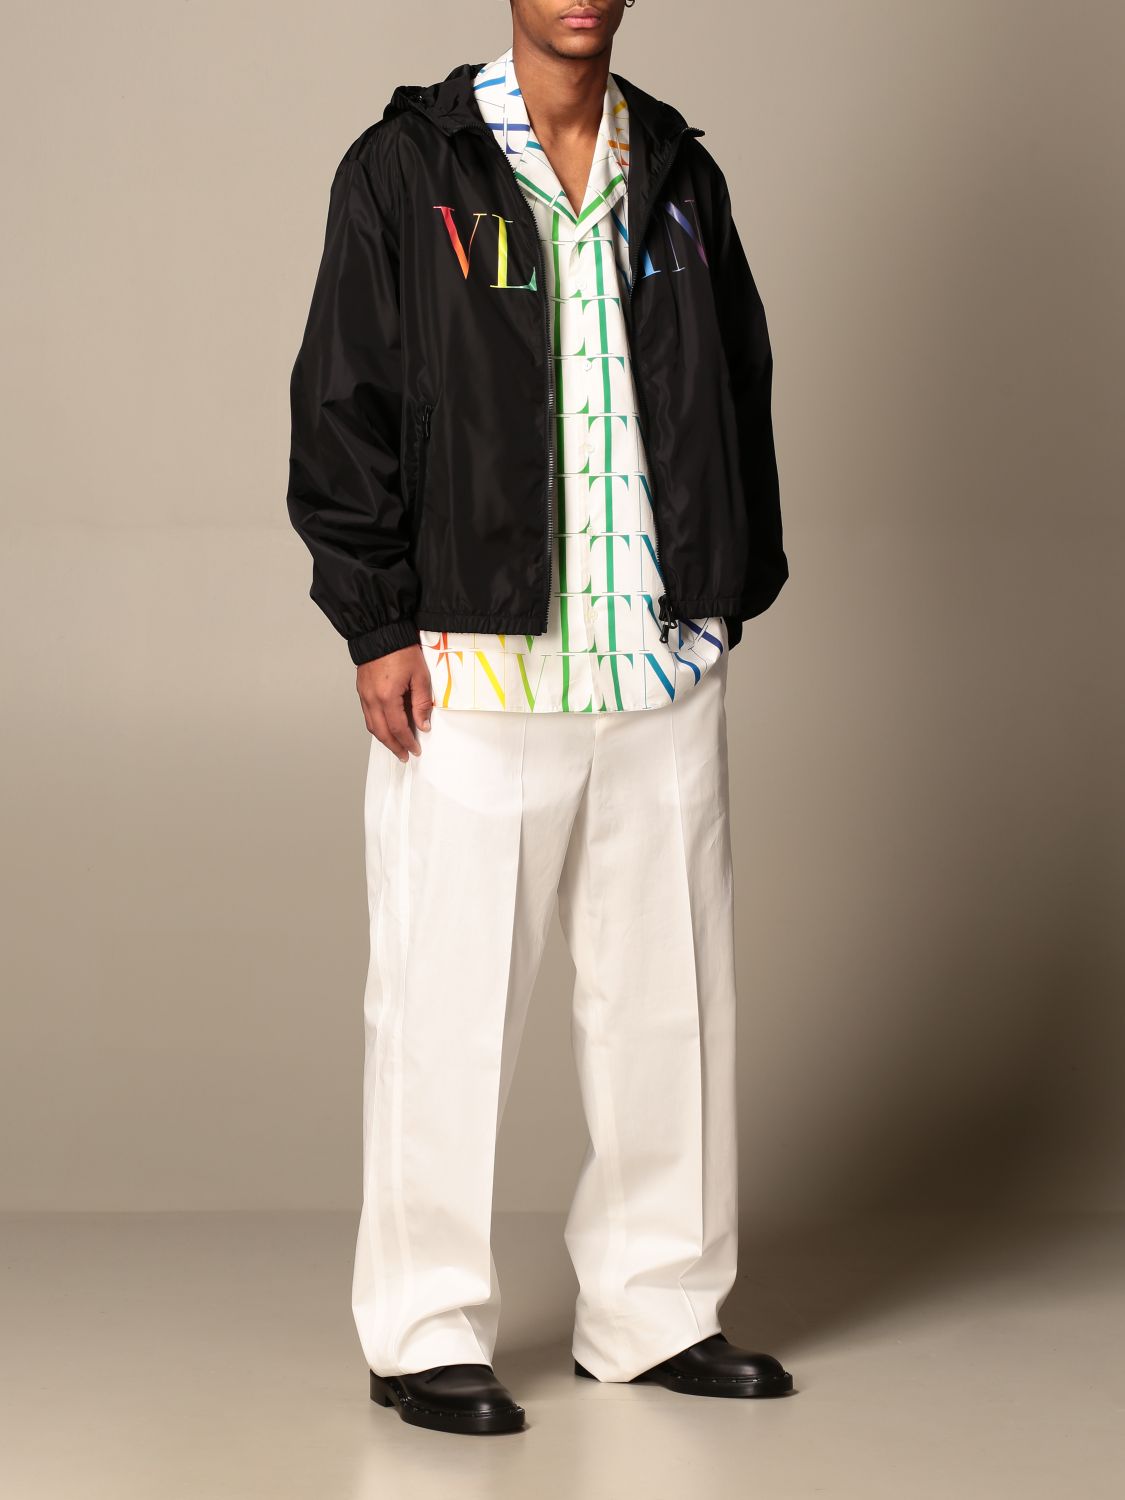 Valentino nylon jacket with multicolor VLTN logo